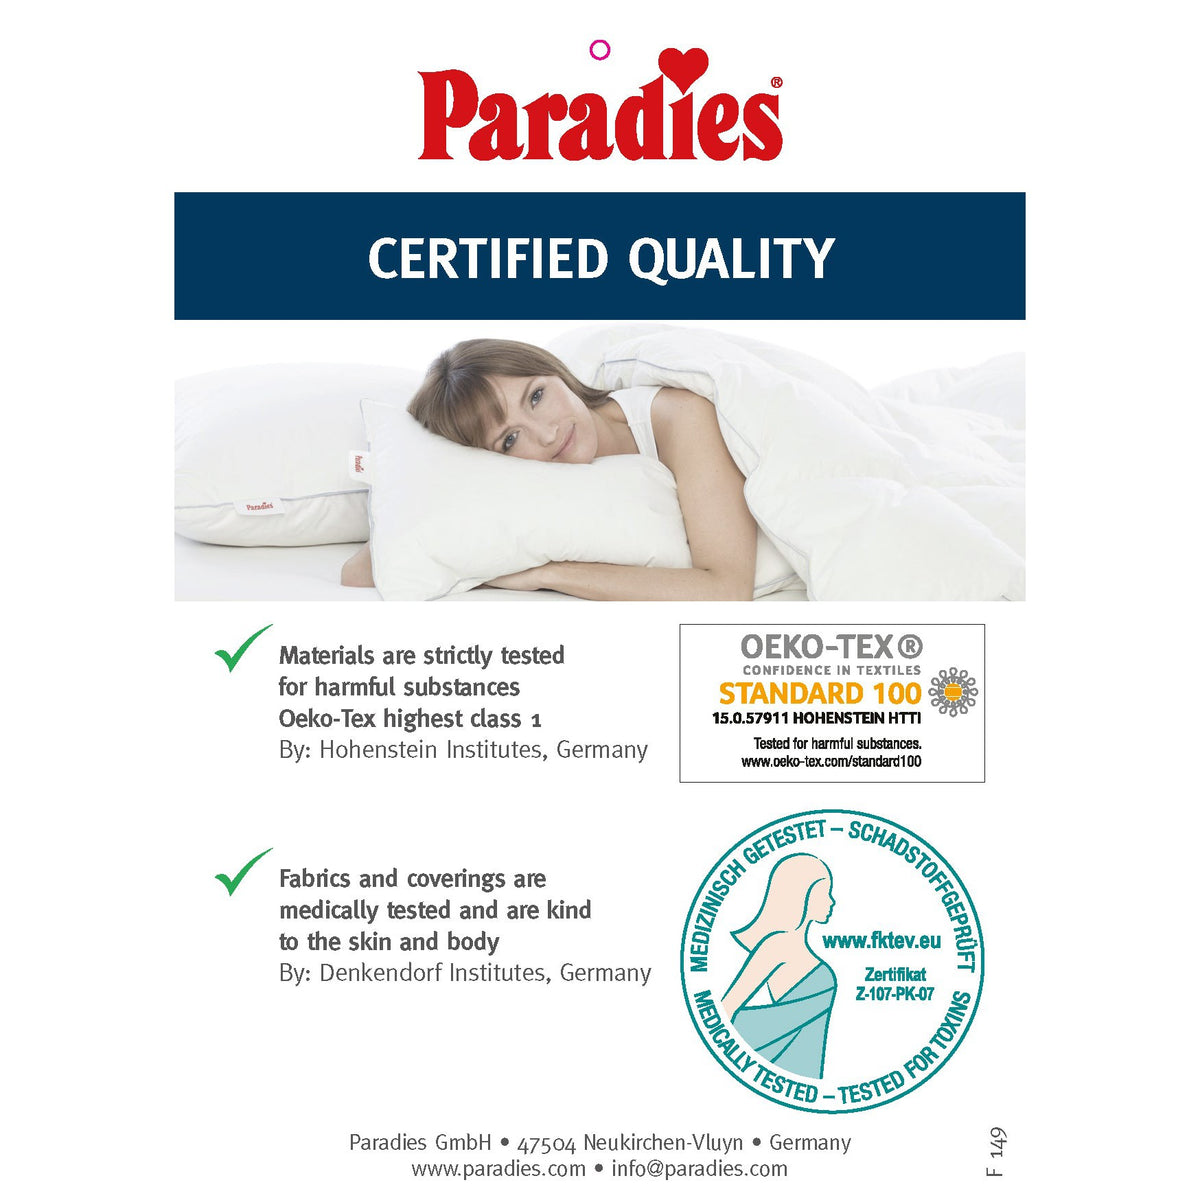 Paradies Down Latex 90 Organic Reform Pillow